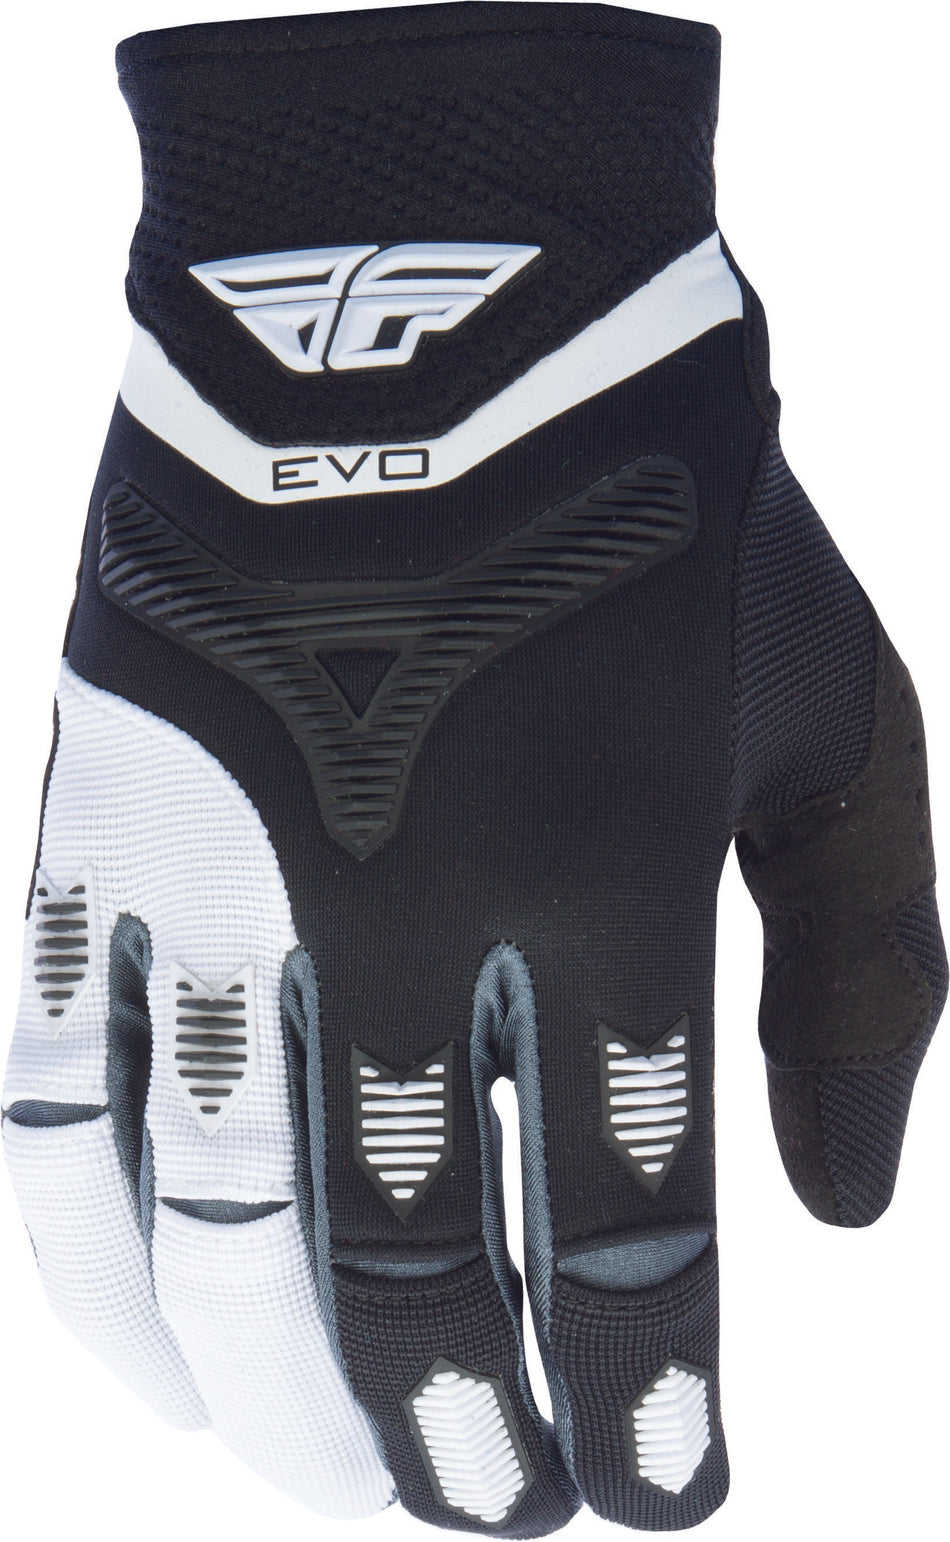 FLY RACING Evo Glove Black/White 2x 370-11012